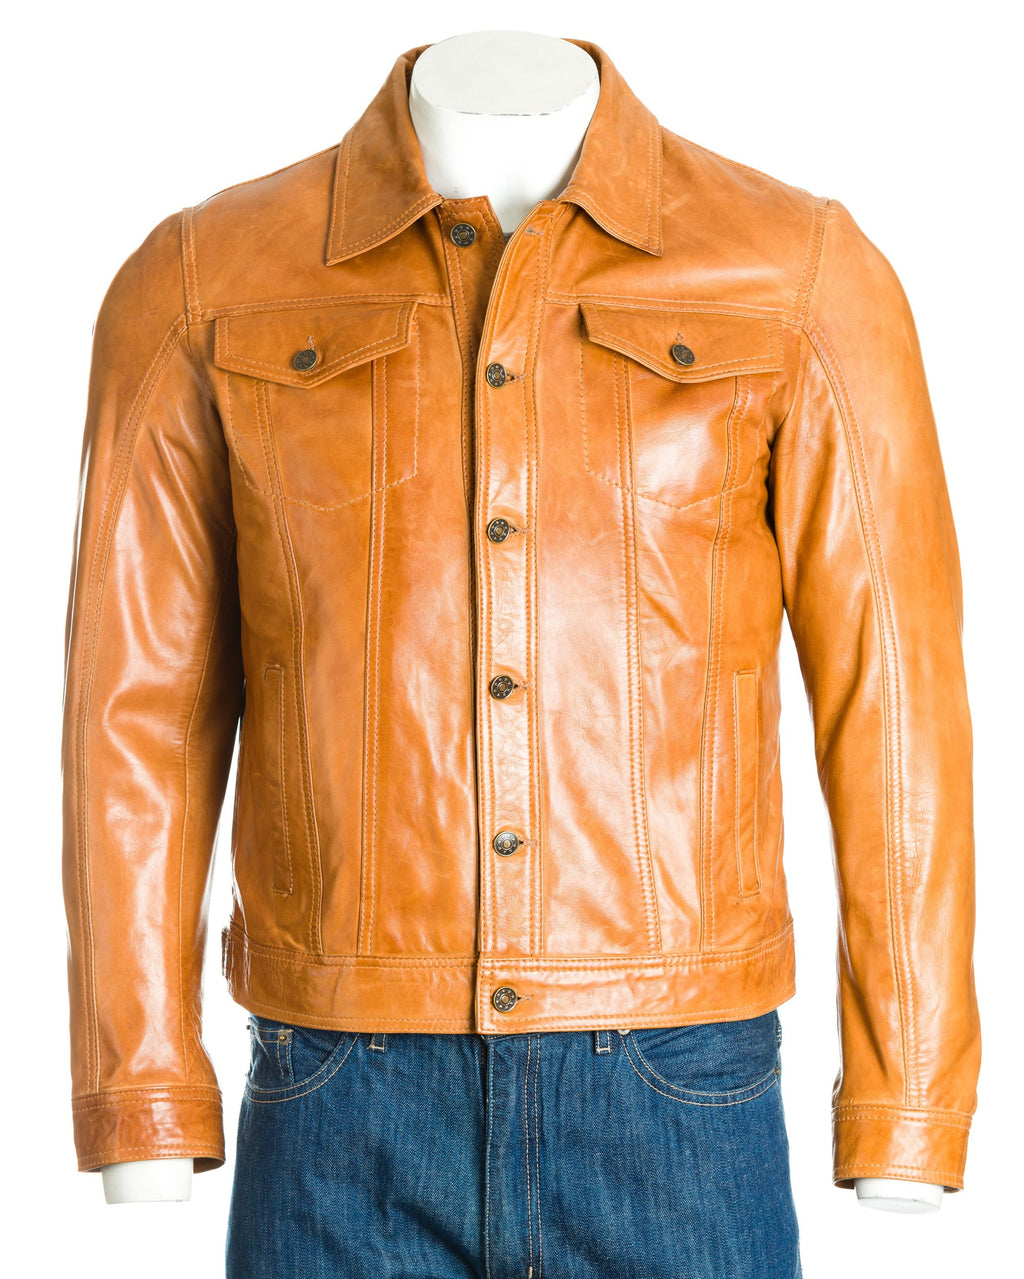 Men's Antique Tan Denim Shirt Style Leather Jacket: Antonio